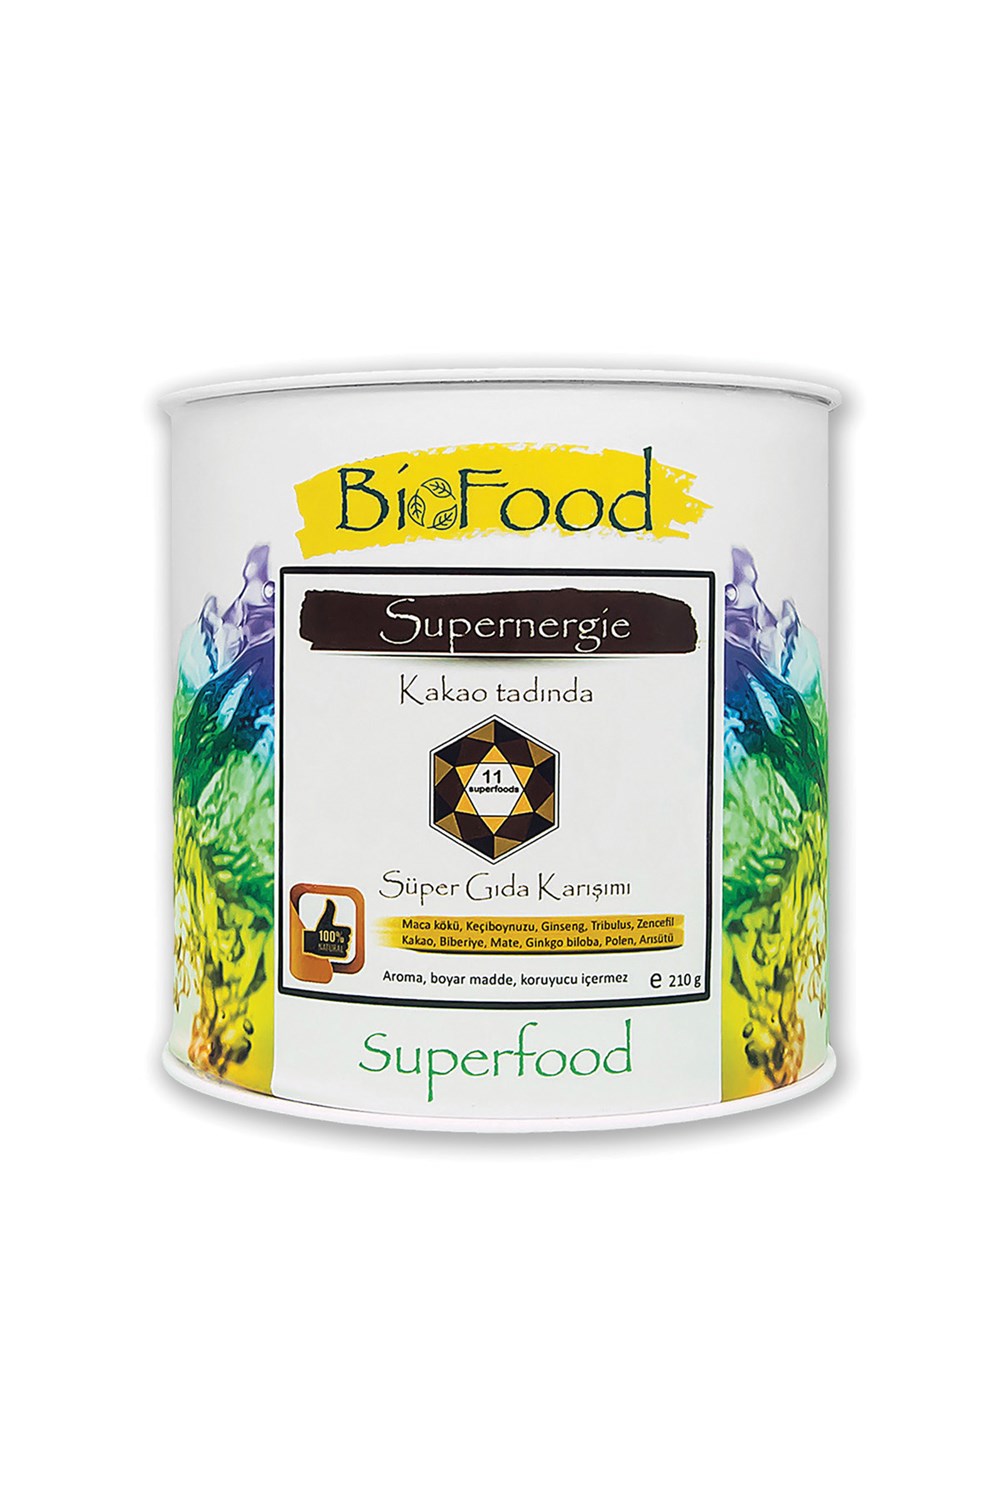 BIOFOOD Supernergie (Kakao tadında) 210 g